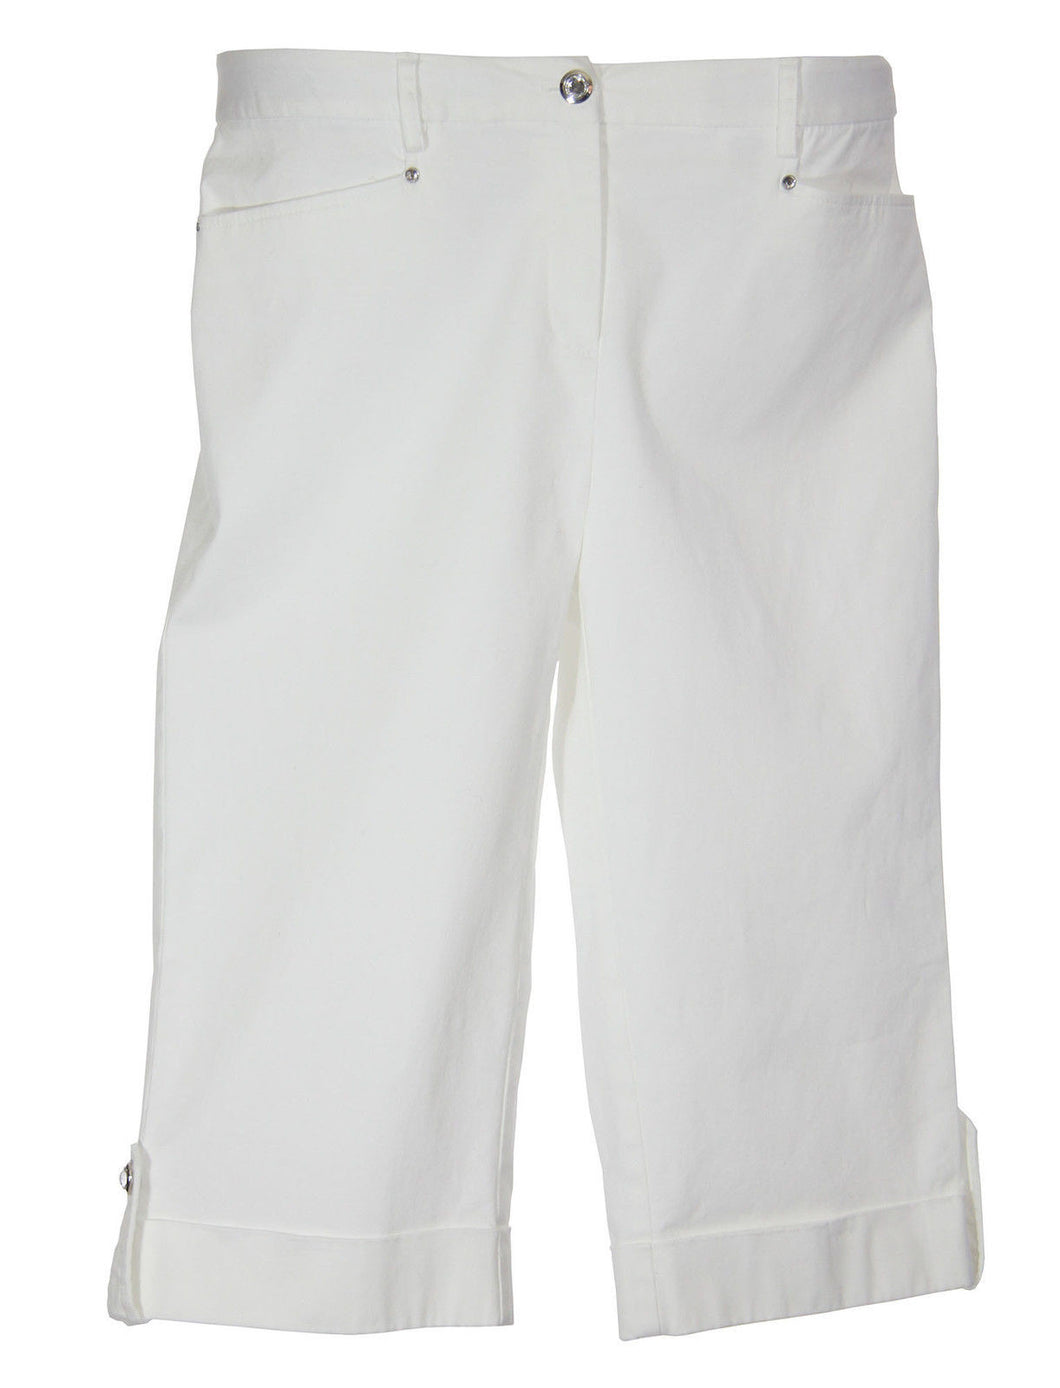 JM Collection White Comfort Waistband Embellished Skimmer Pants